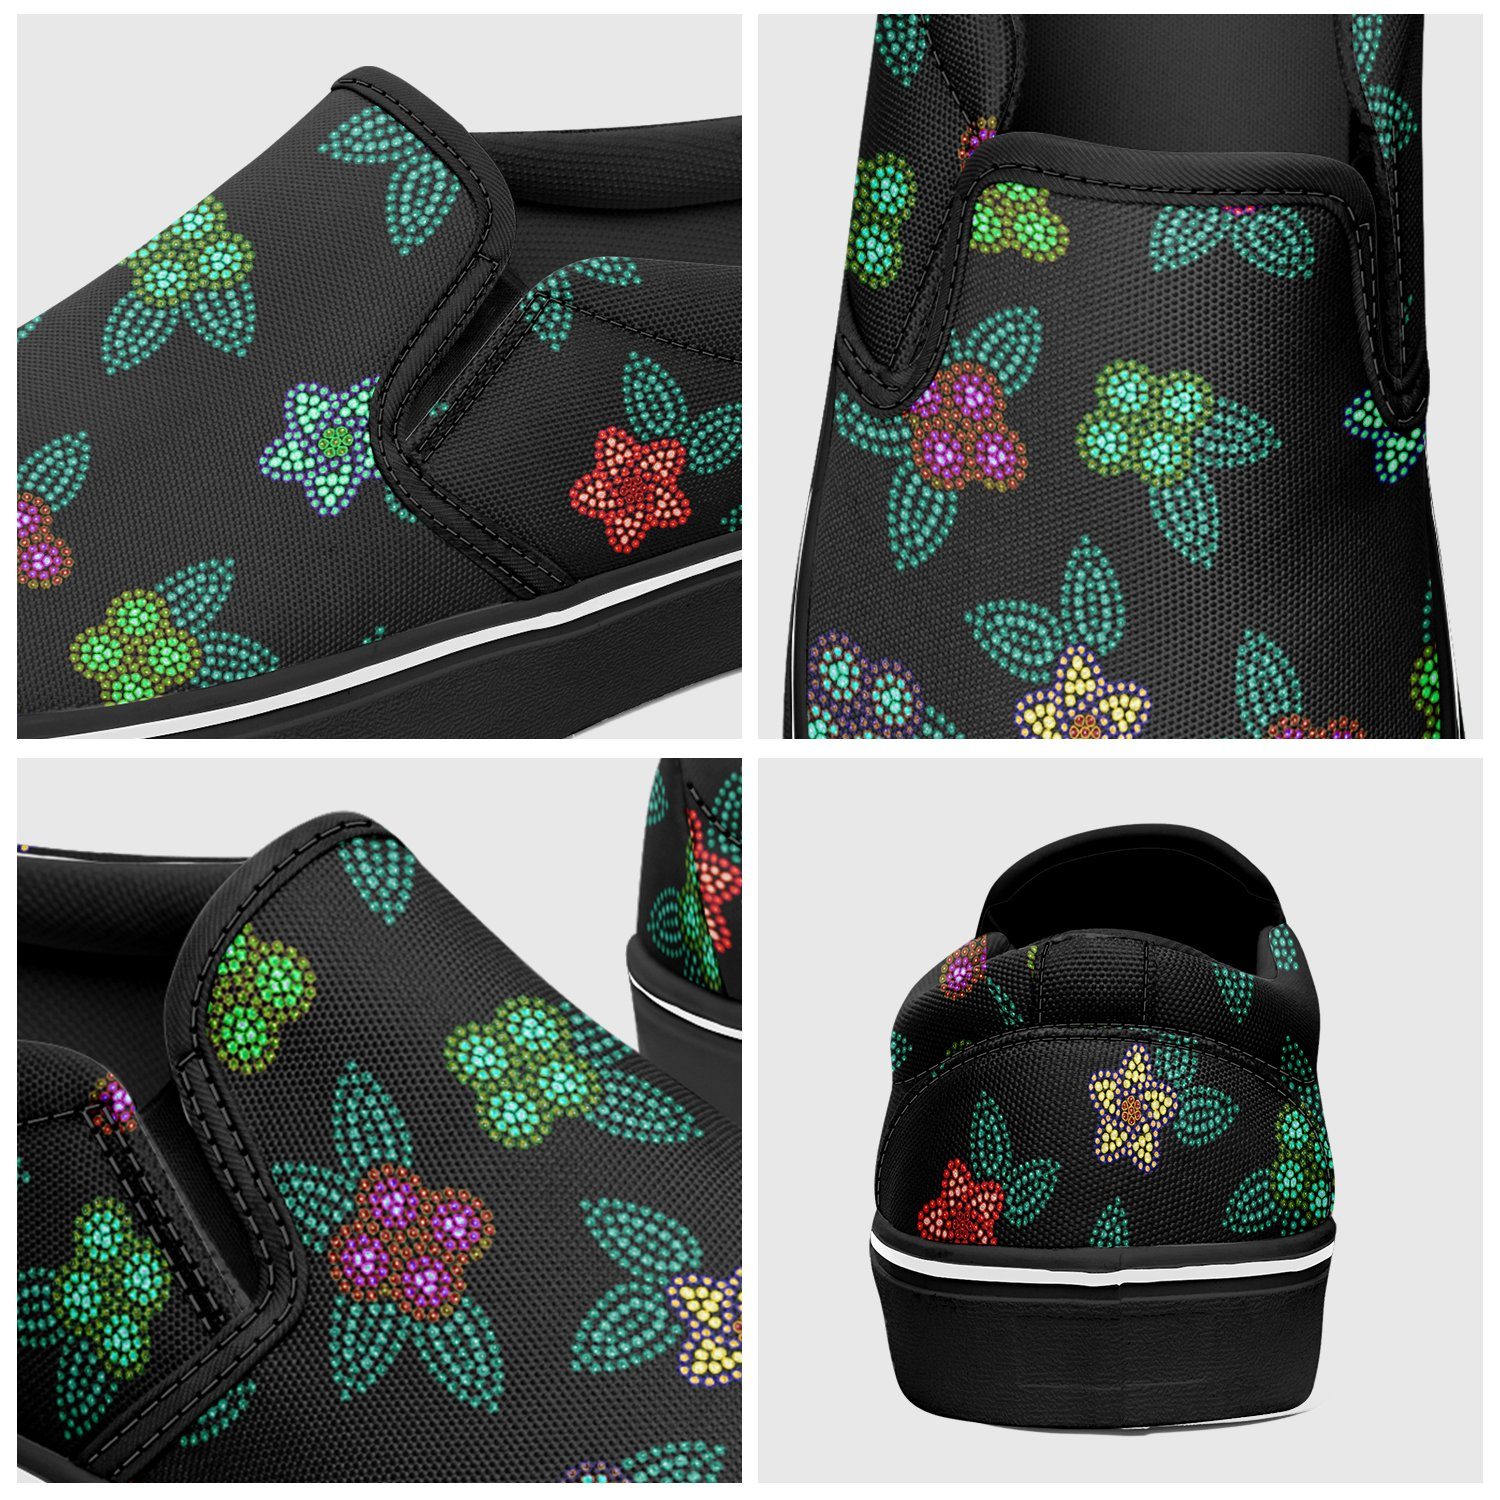 Berry Flowers Black Otoyimm Kid's Canvas Slip On Shoes otoyimm Herman 